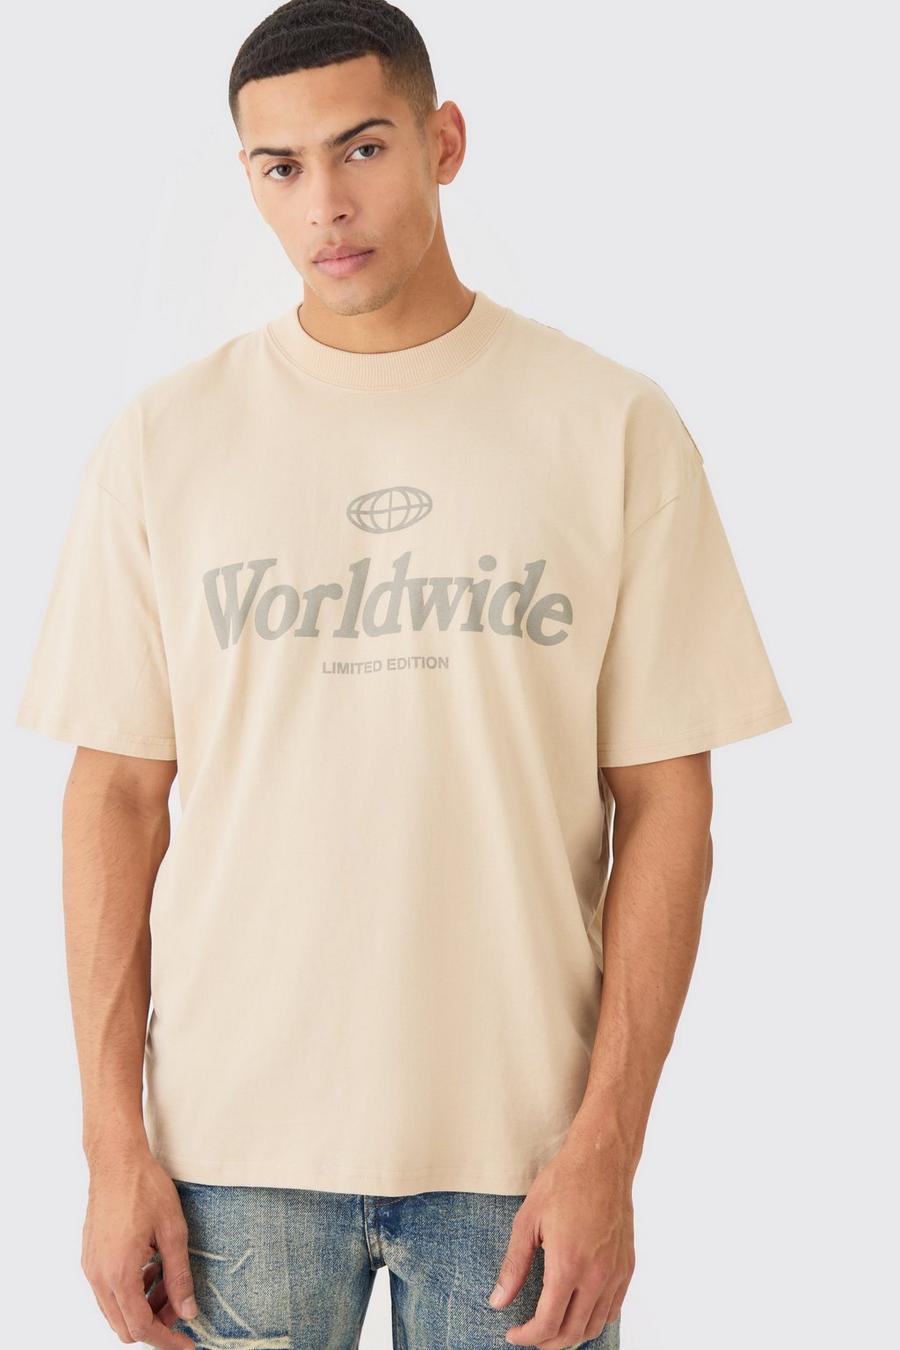 T-shirt oversize Worldwide, Sand